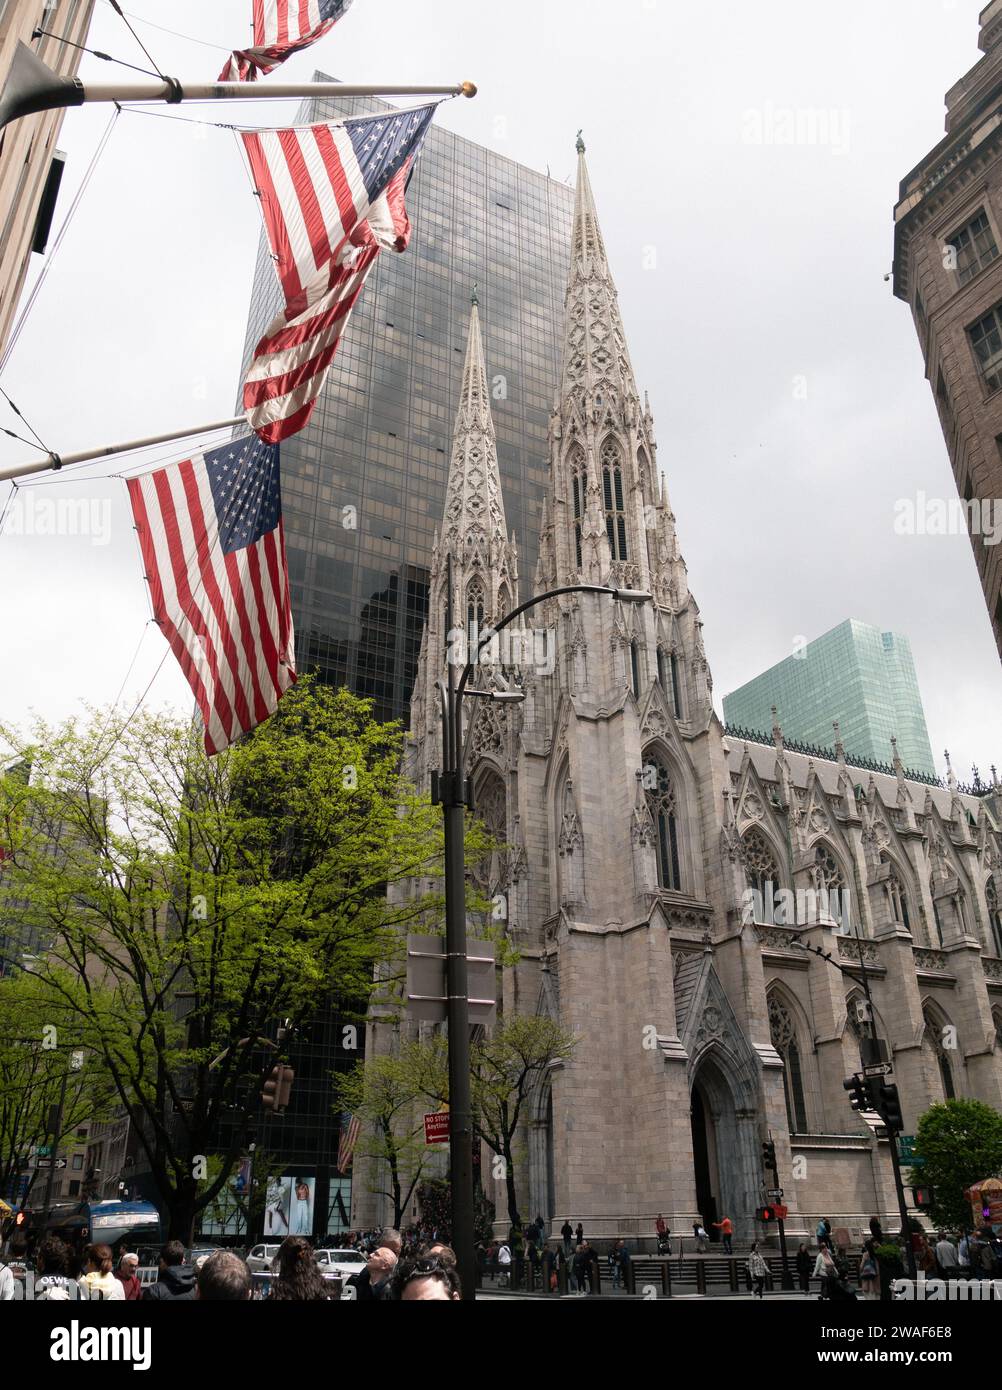 St Patricks Cathedral e Olympic Tower a New York City, New York, Stati Uniti, chiesa gotica, bandiere americane, cielo grigio Foto Stock